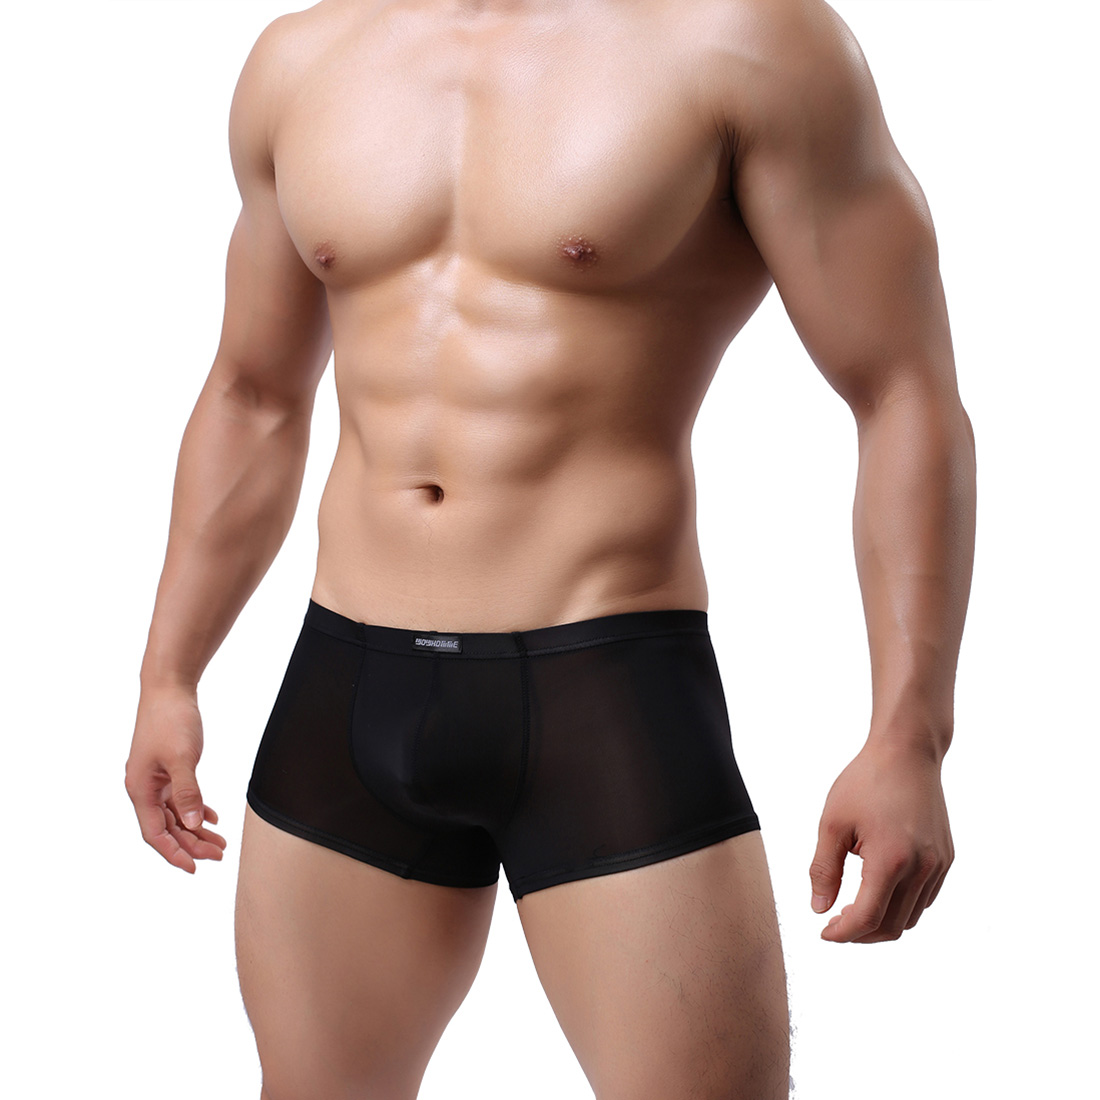 Men's Sexy Lingerie Underwear See-through Boxer Shorts Underpants WH42 Black L